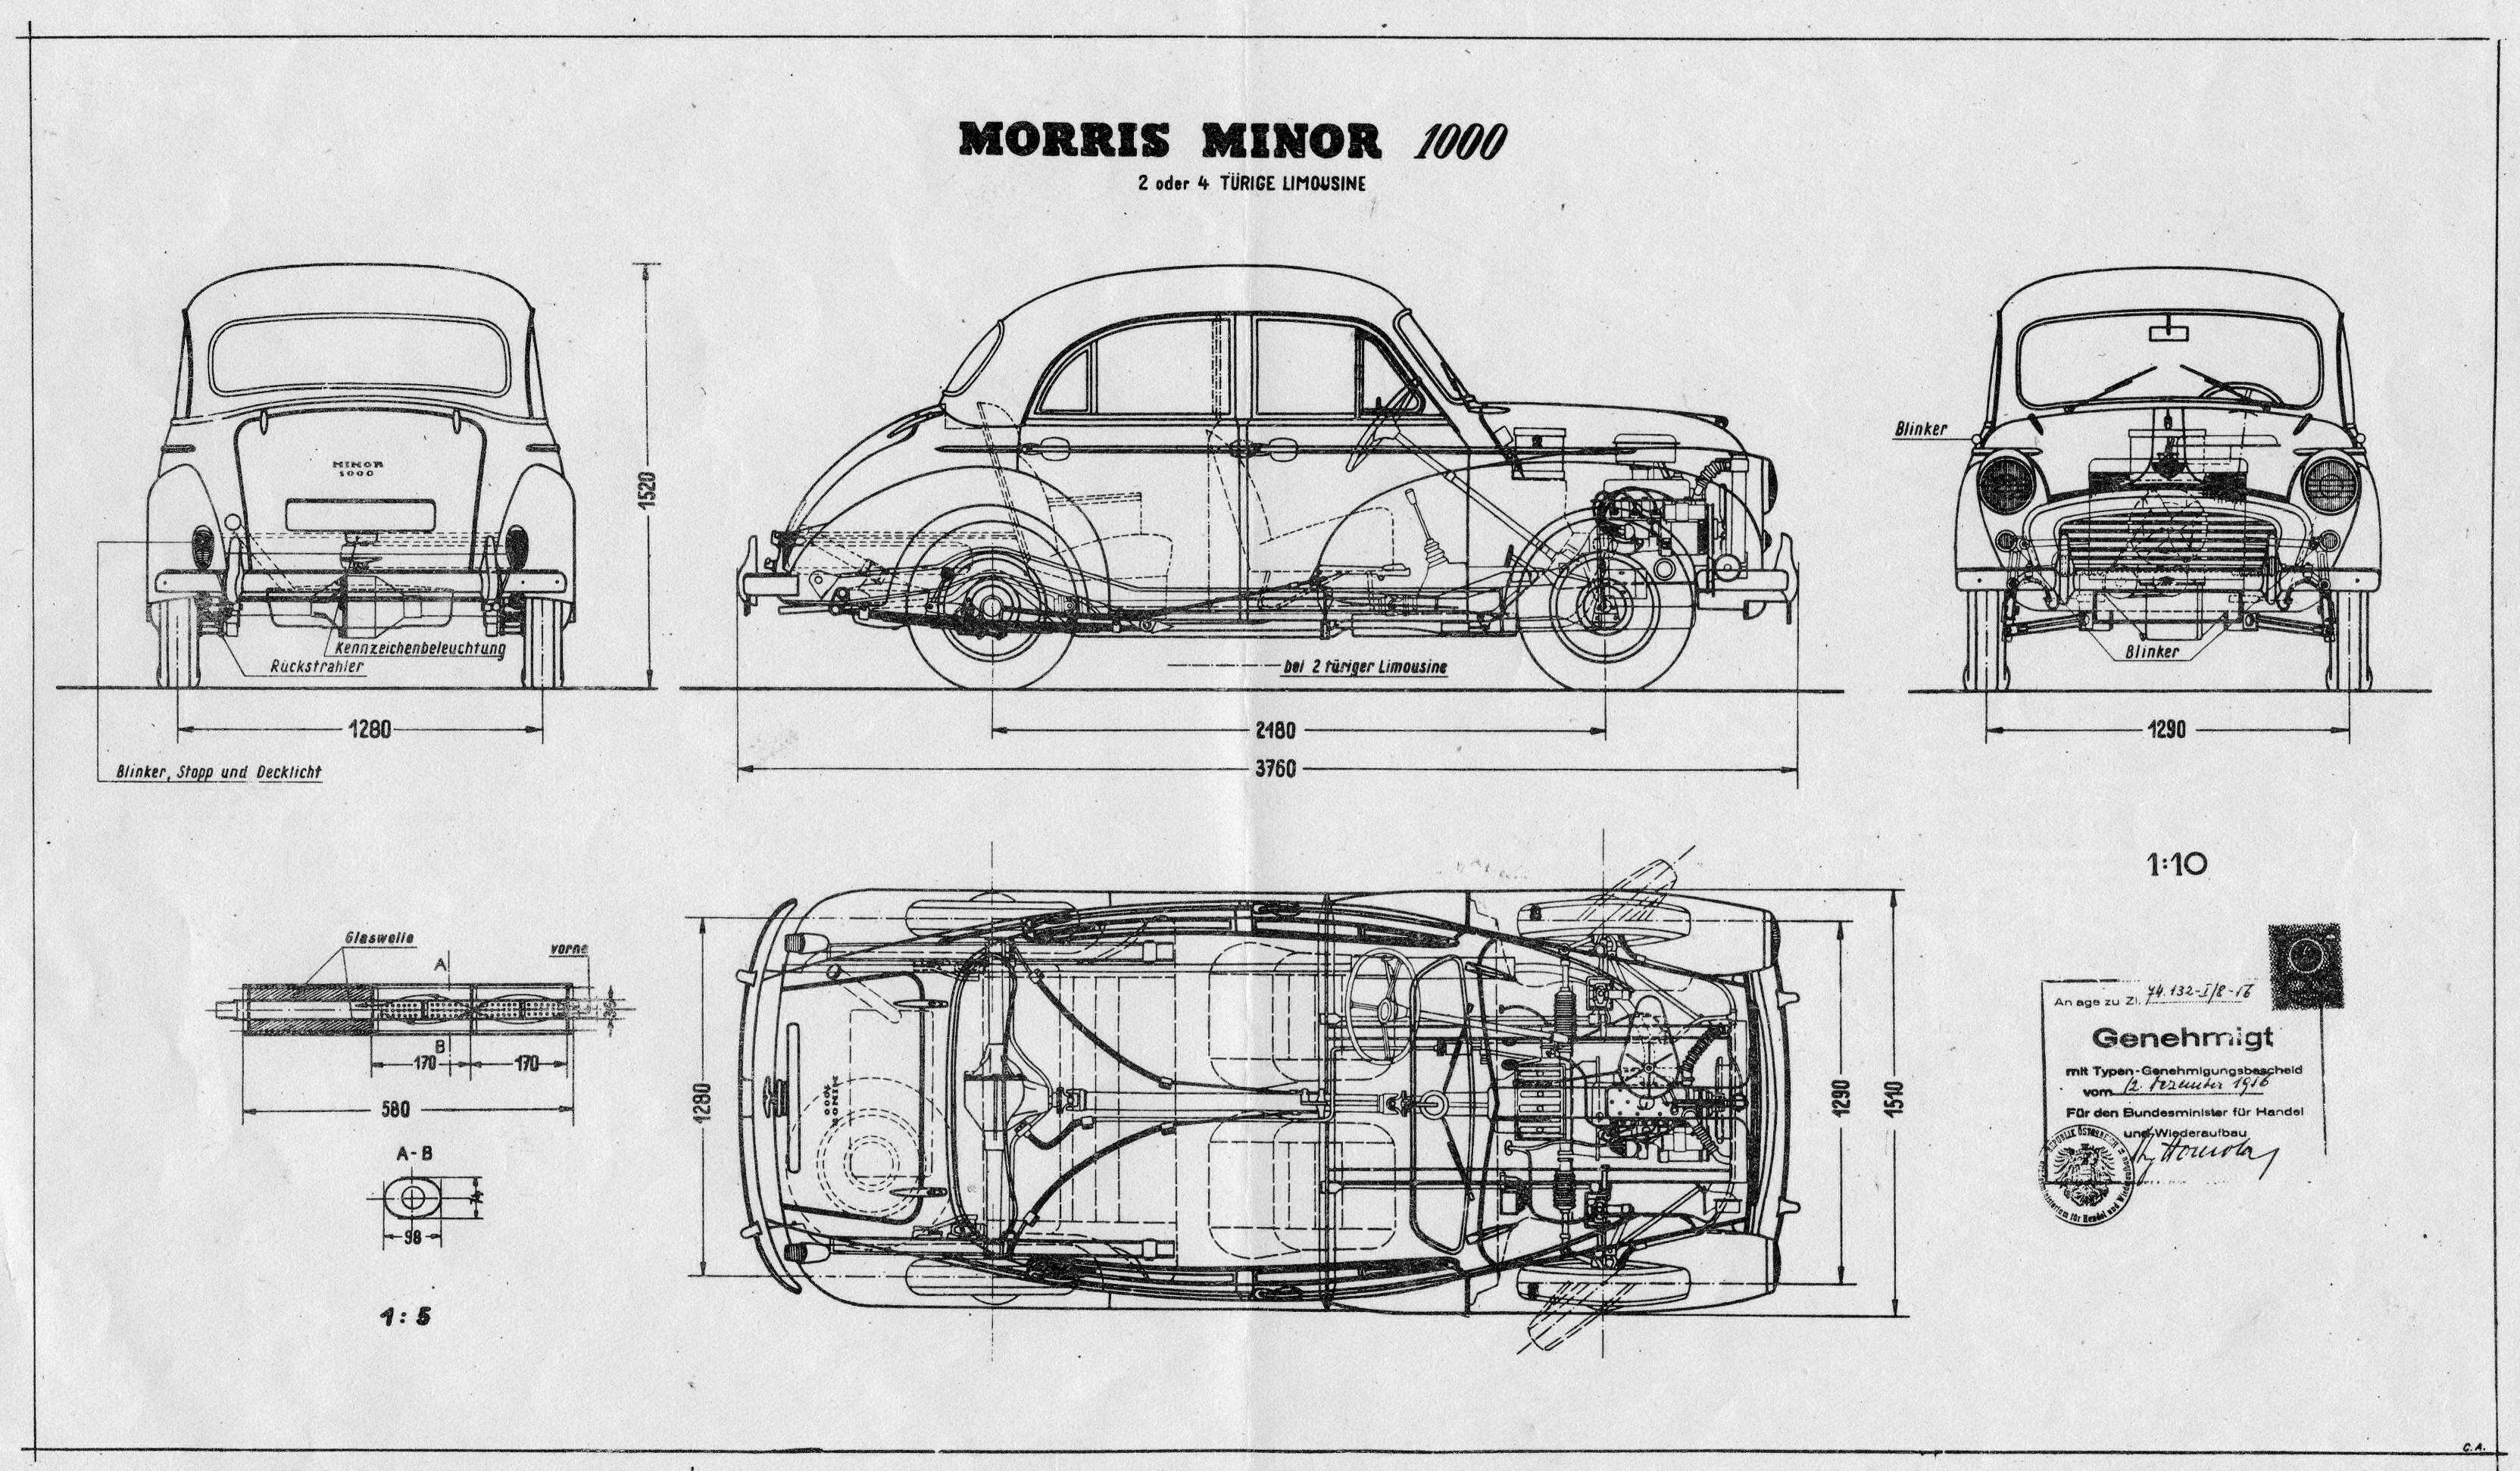 Mini Cooper - The Morris Minor: A British miracle